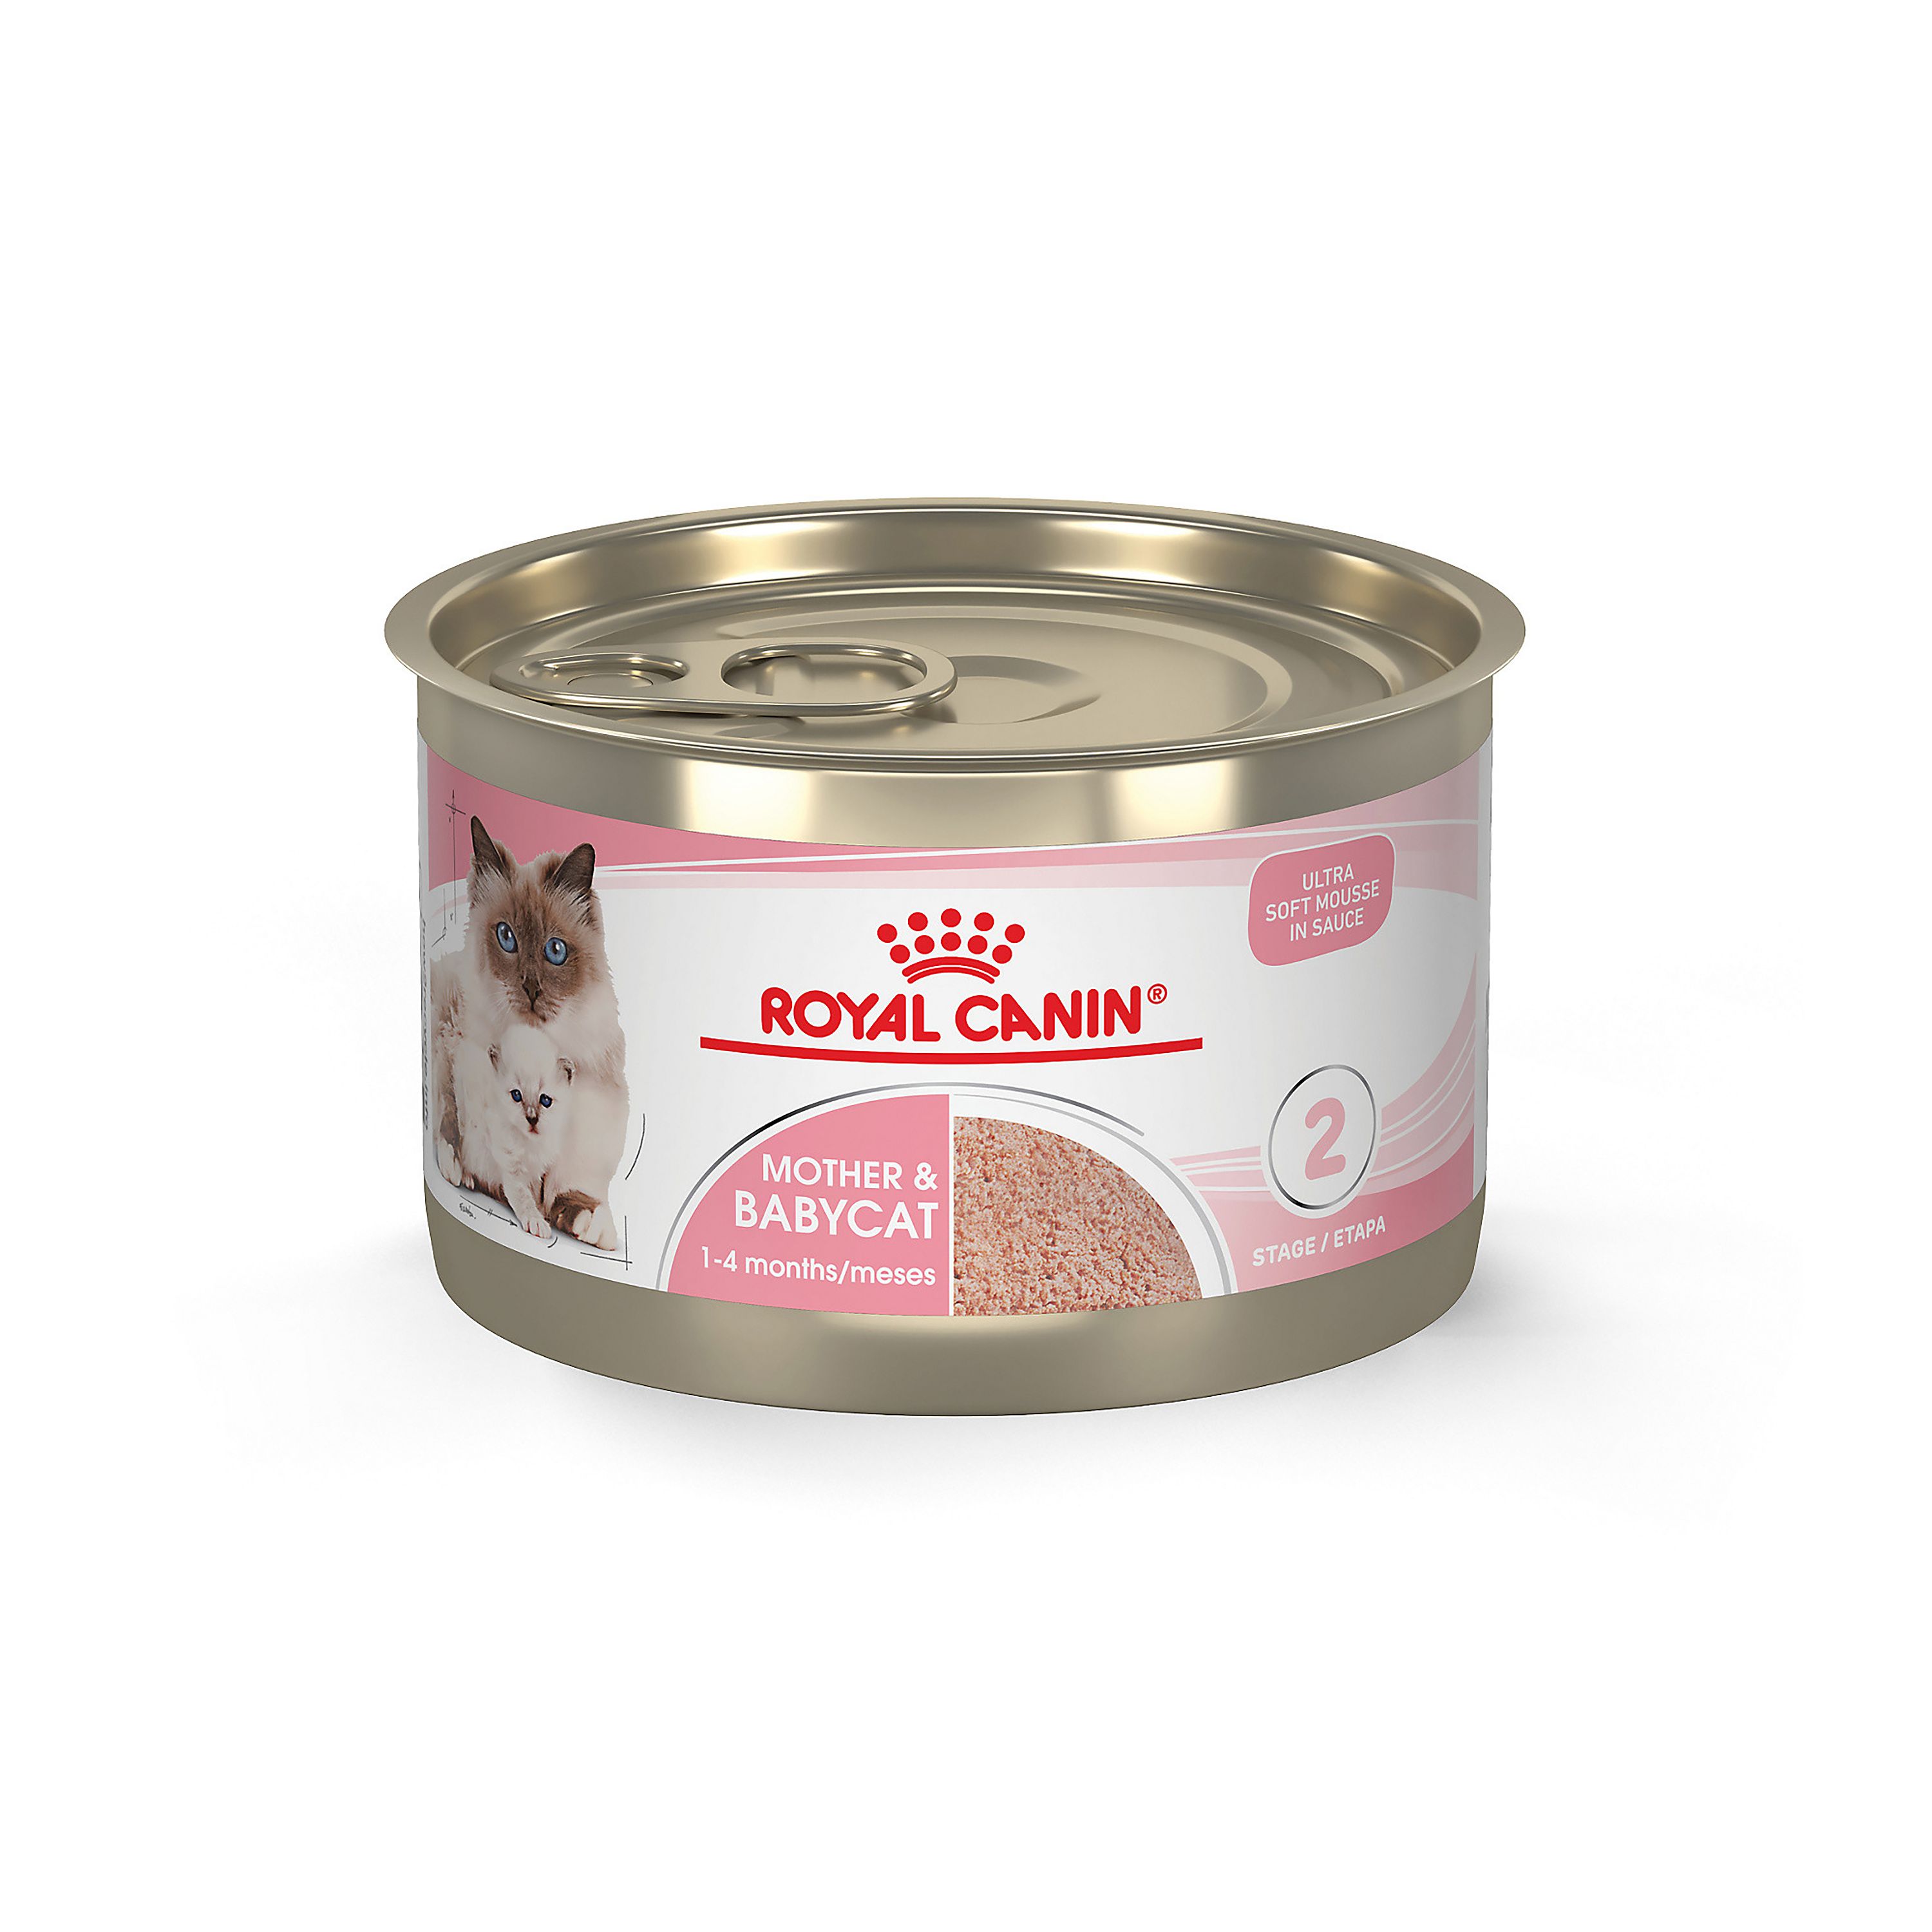 Royal Canin® Cat Food & Kitten Food